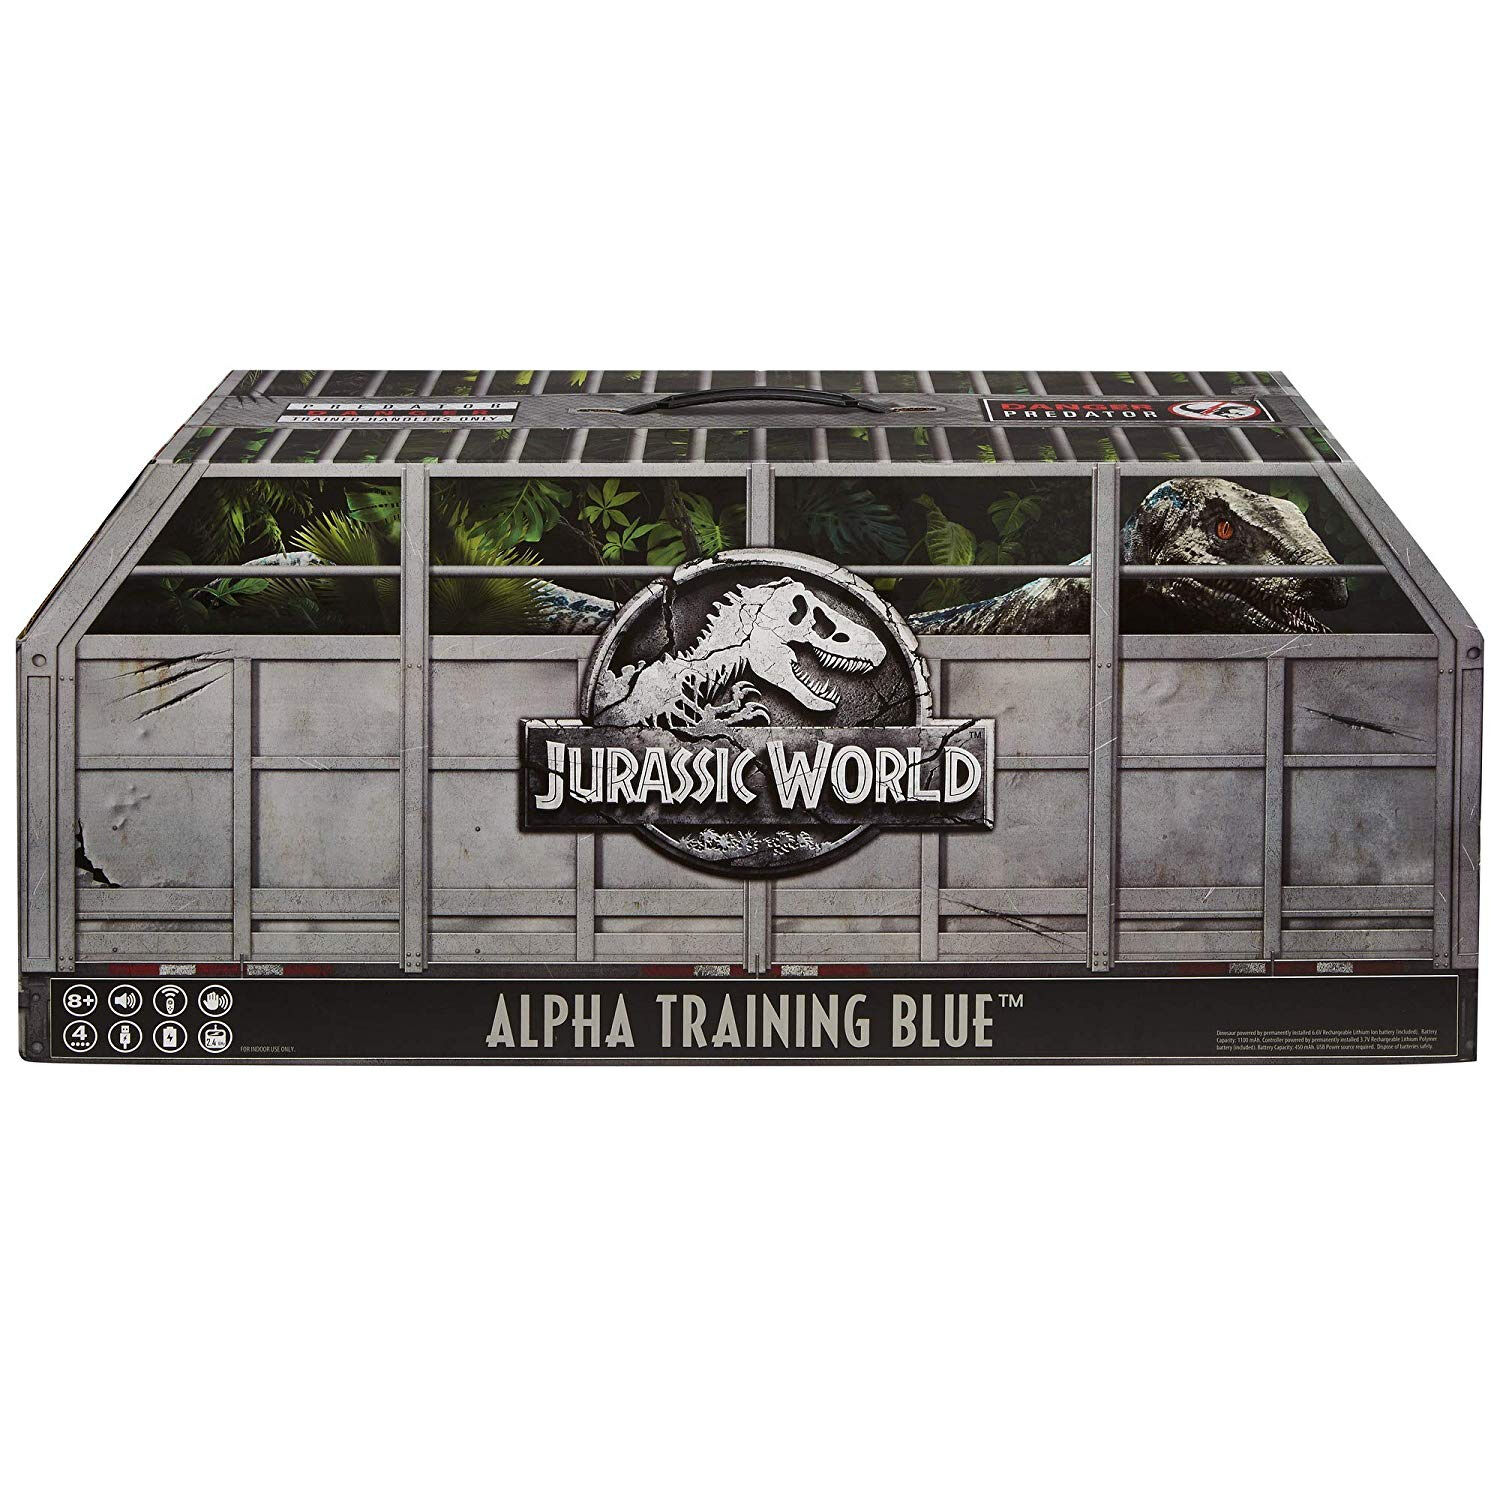 Jurassic World Toys Alpha Training Blue Velociraptor, You Can